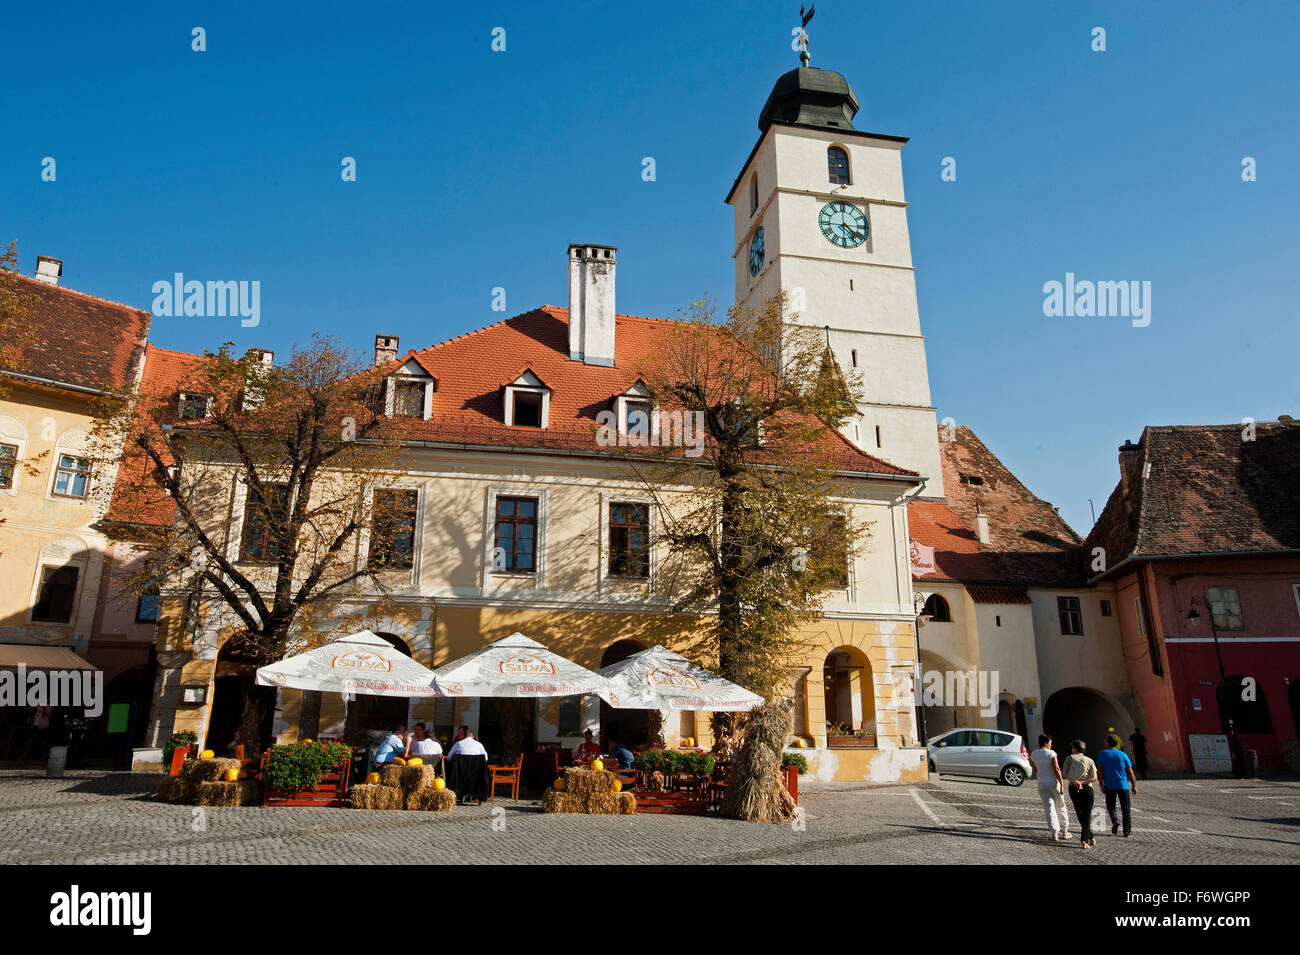 Piata Huet in the historic part of town, Sibiu, Transylvania, Romania Stock Photo